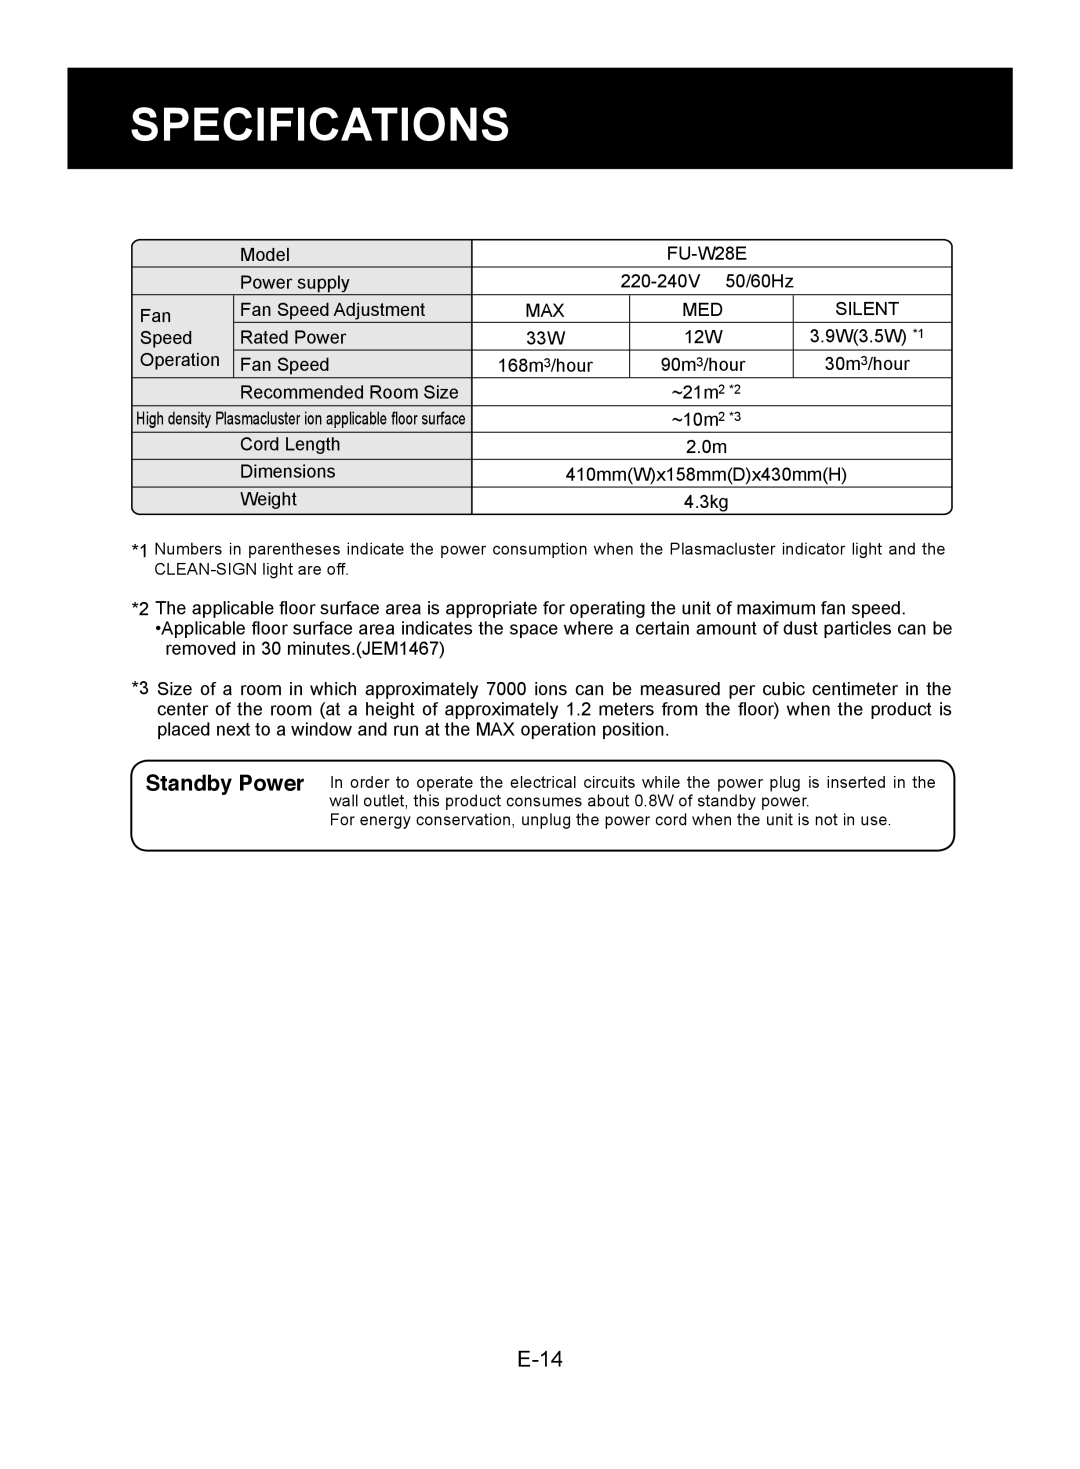 Sharp FU-W28E operation manual Specifications, E-14 